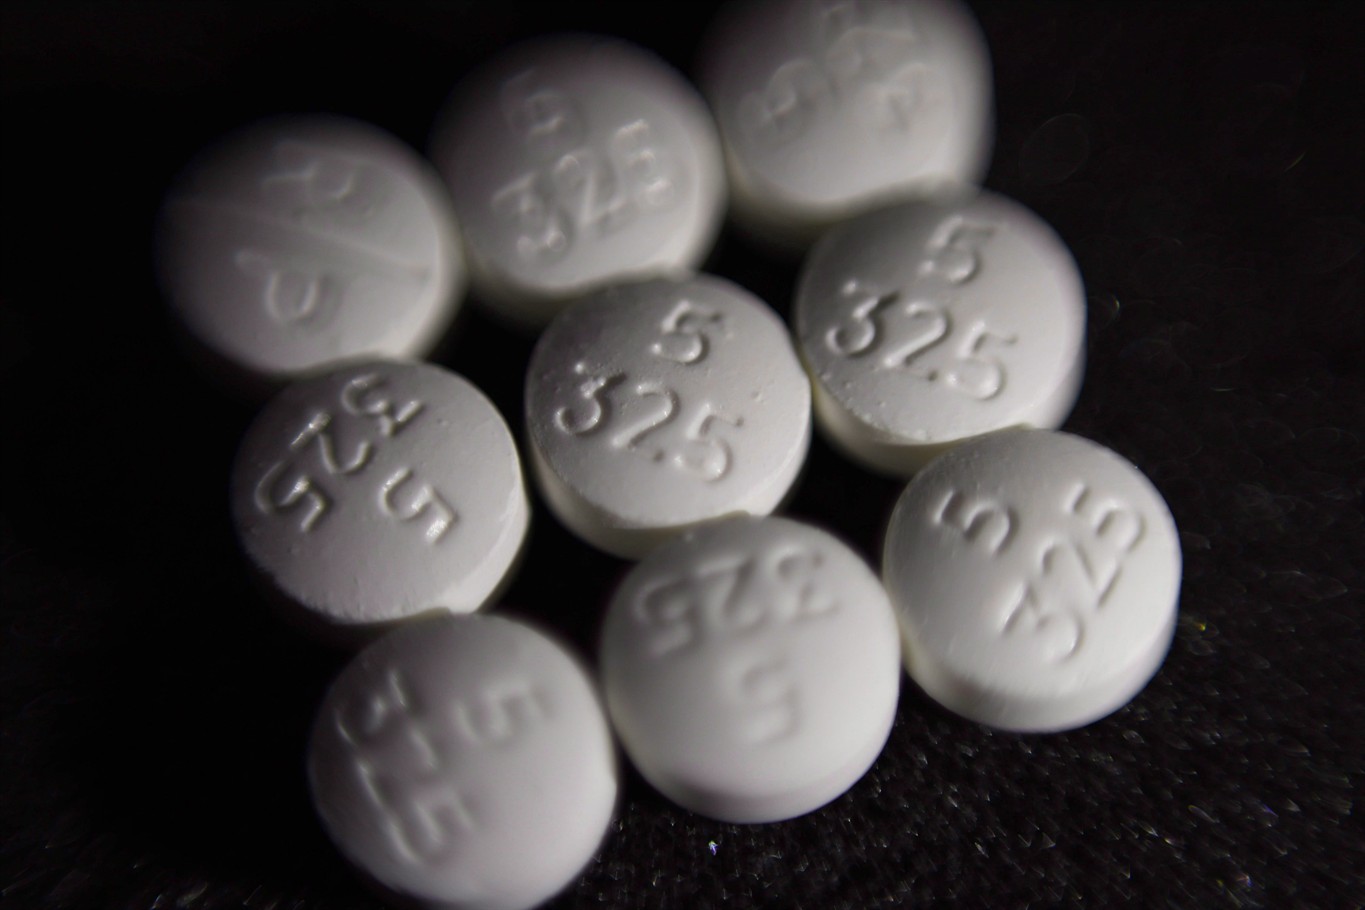 Study looks to provide insight into prescribed opioids in Canada | CityNews Edmonton